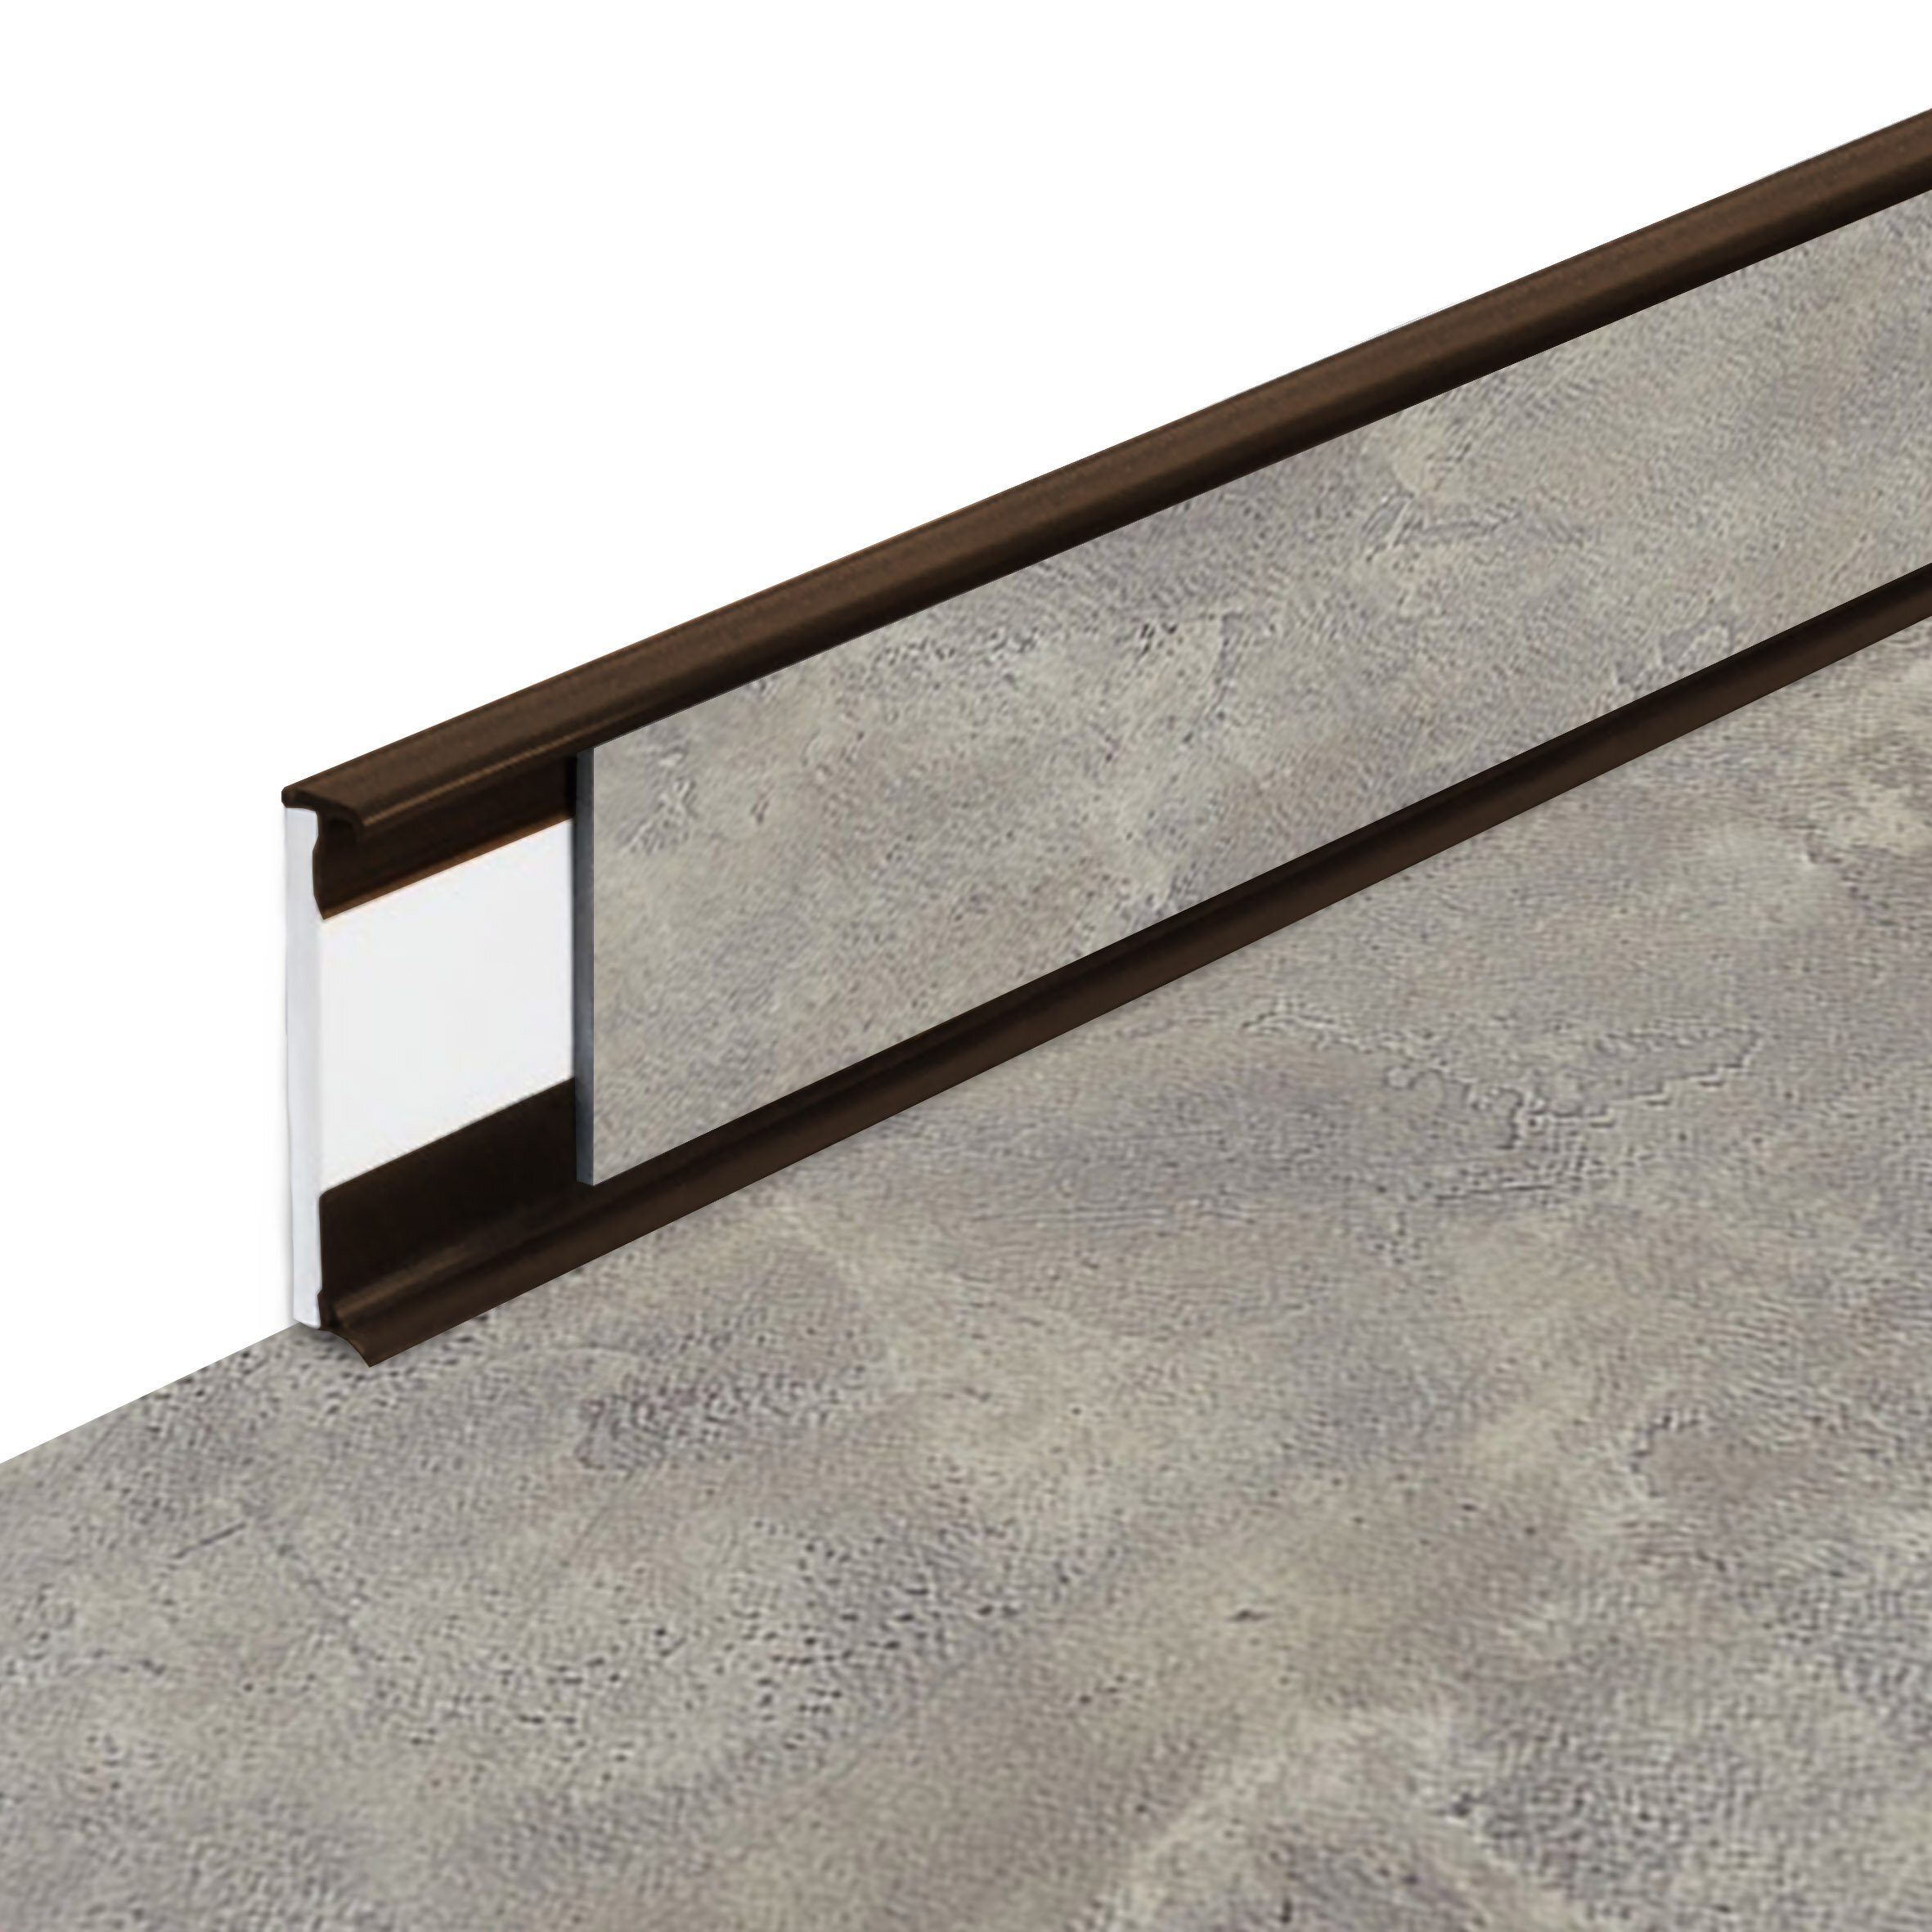 PVC vinylová soklová podlahová lišta Fortelock Business Forsen grey clay C022 brown - délka 200 cm, výška 5,8 cm, tloušťka 1,2 cm